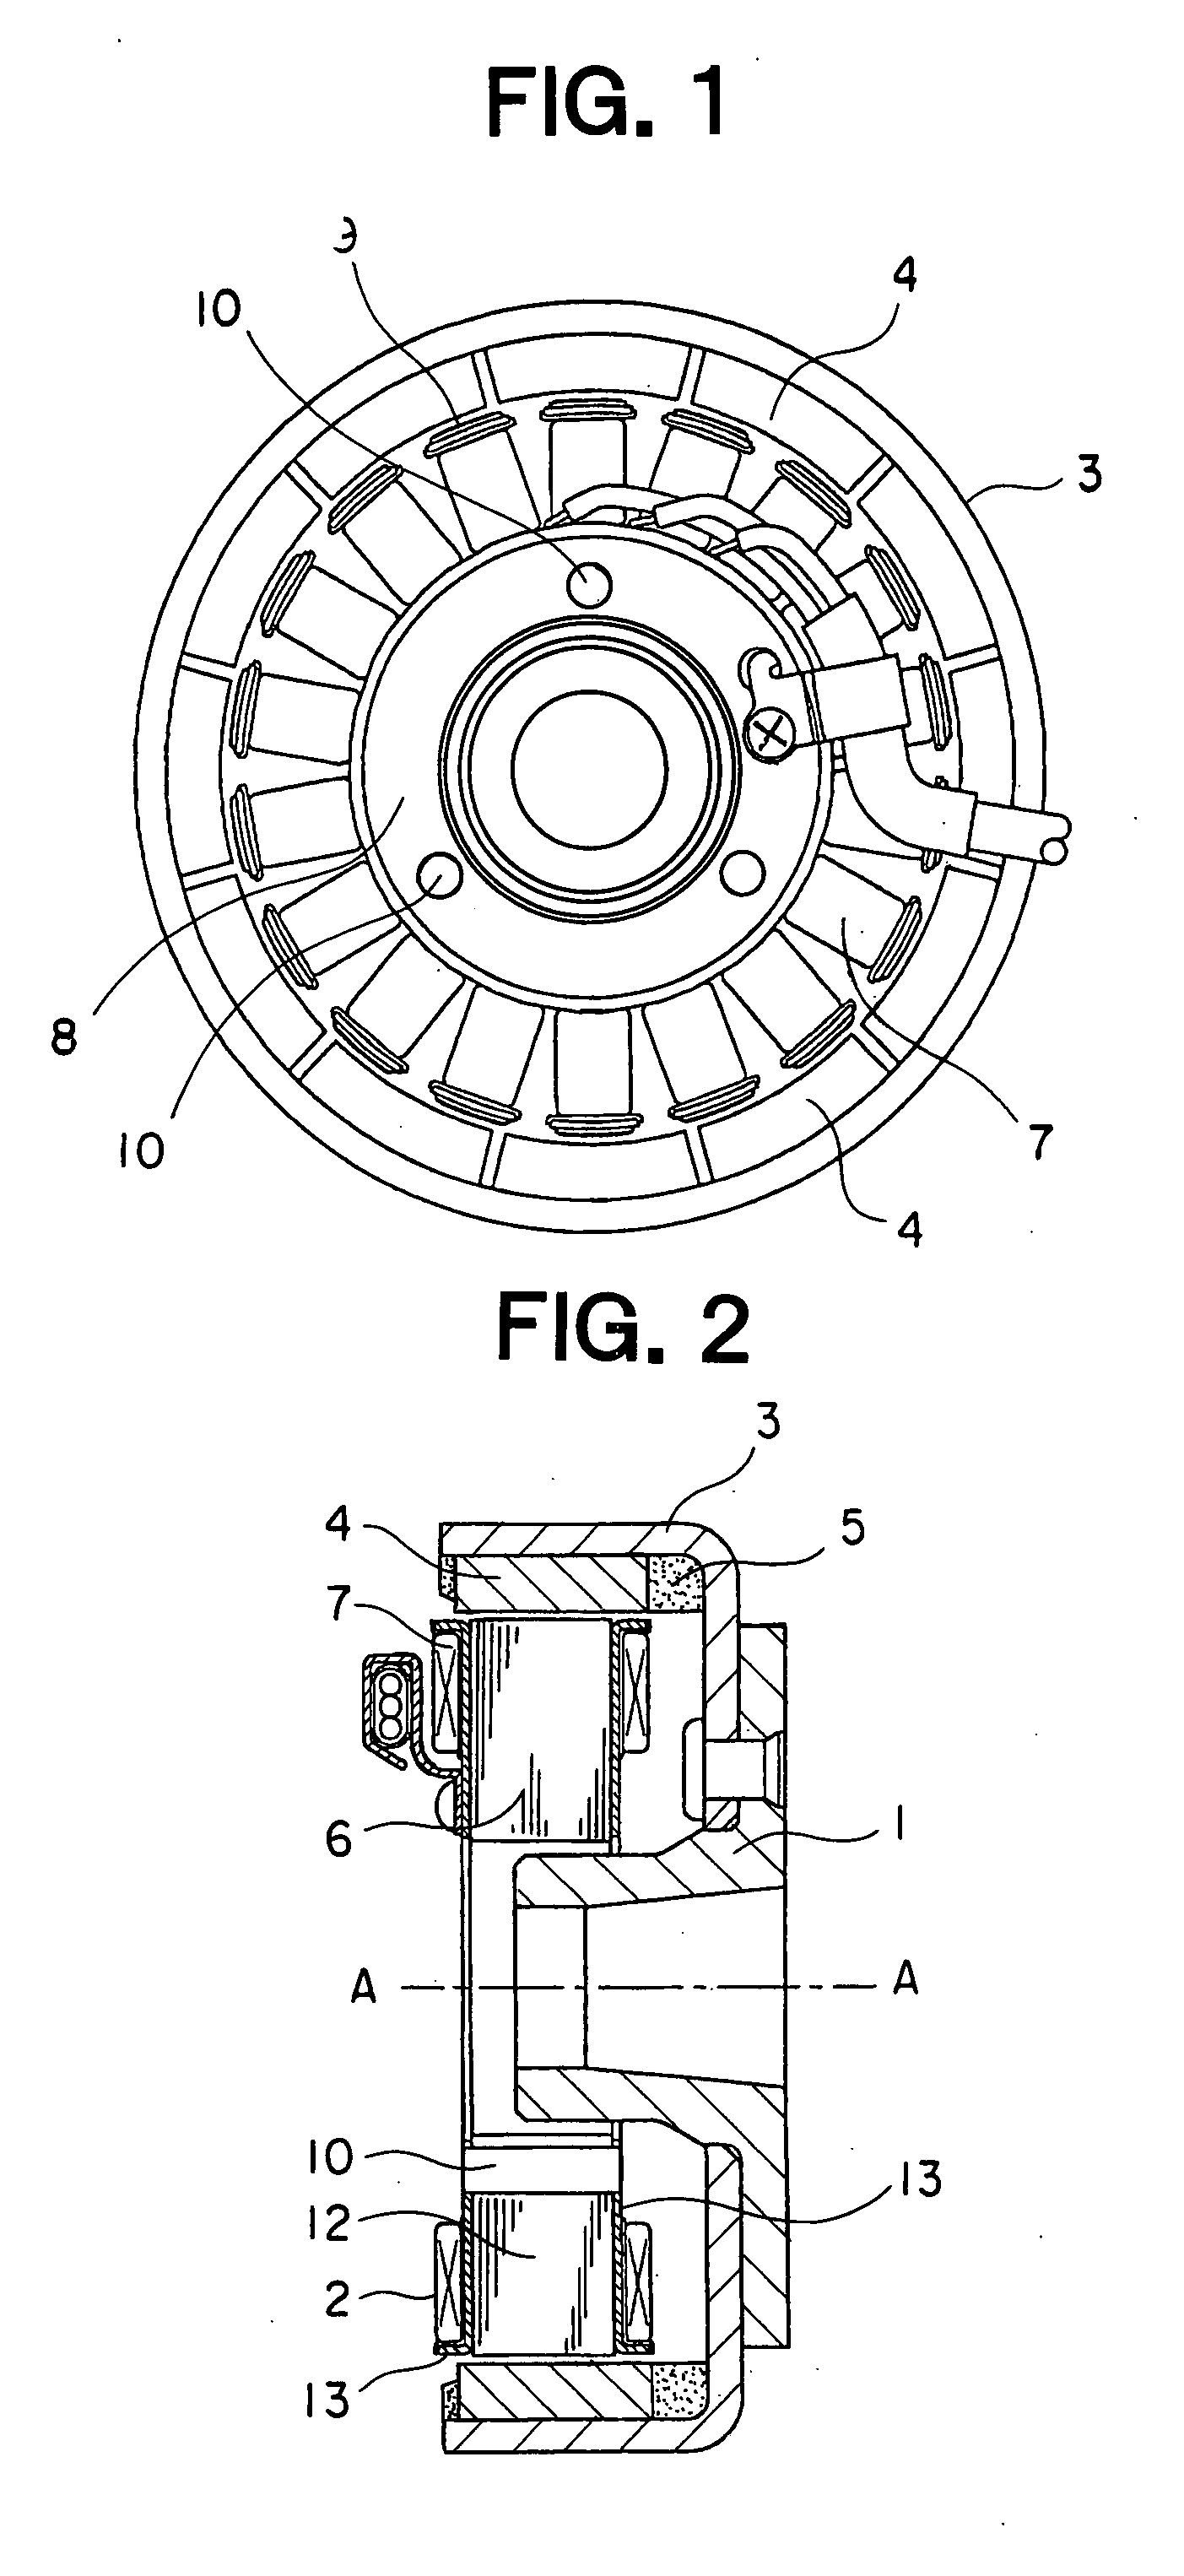 Three-phase rotating electrical machine